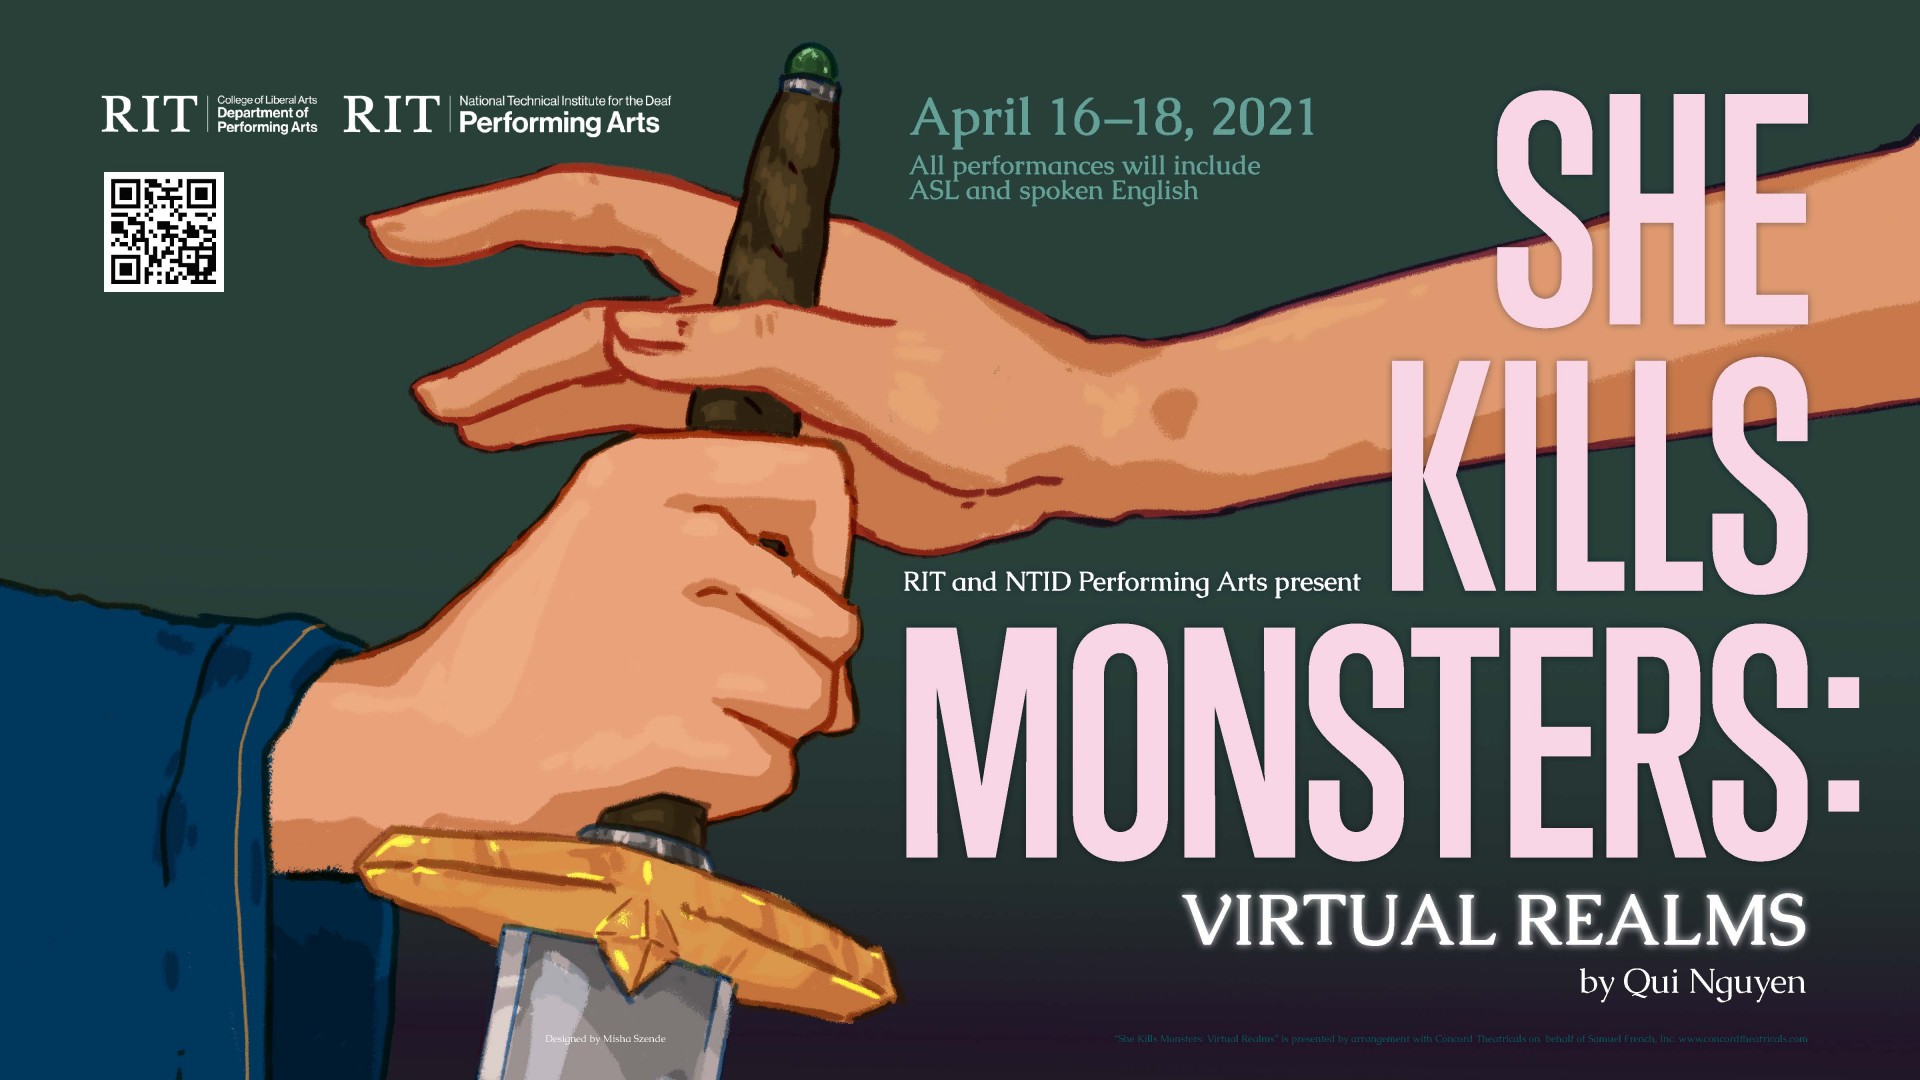 She Kills Monsters: Virtual Realms